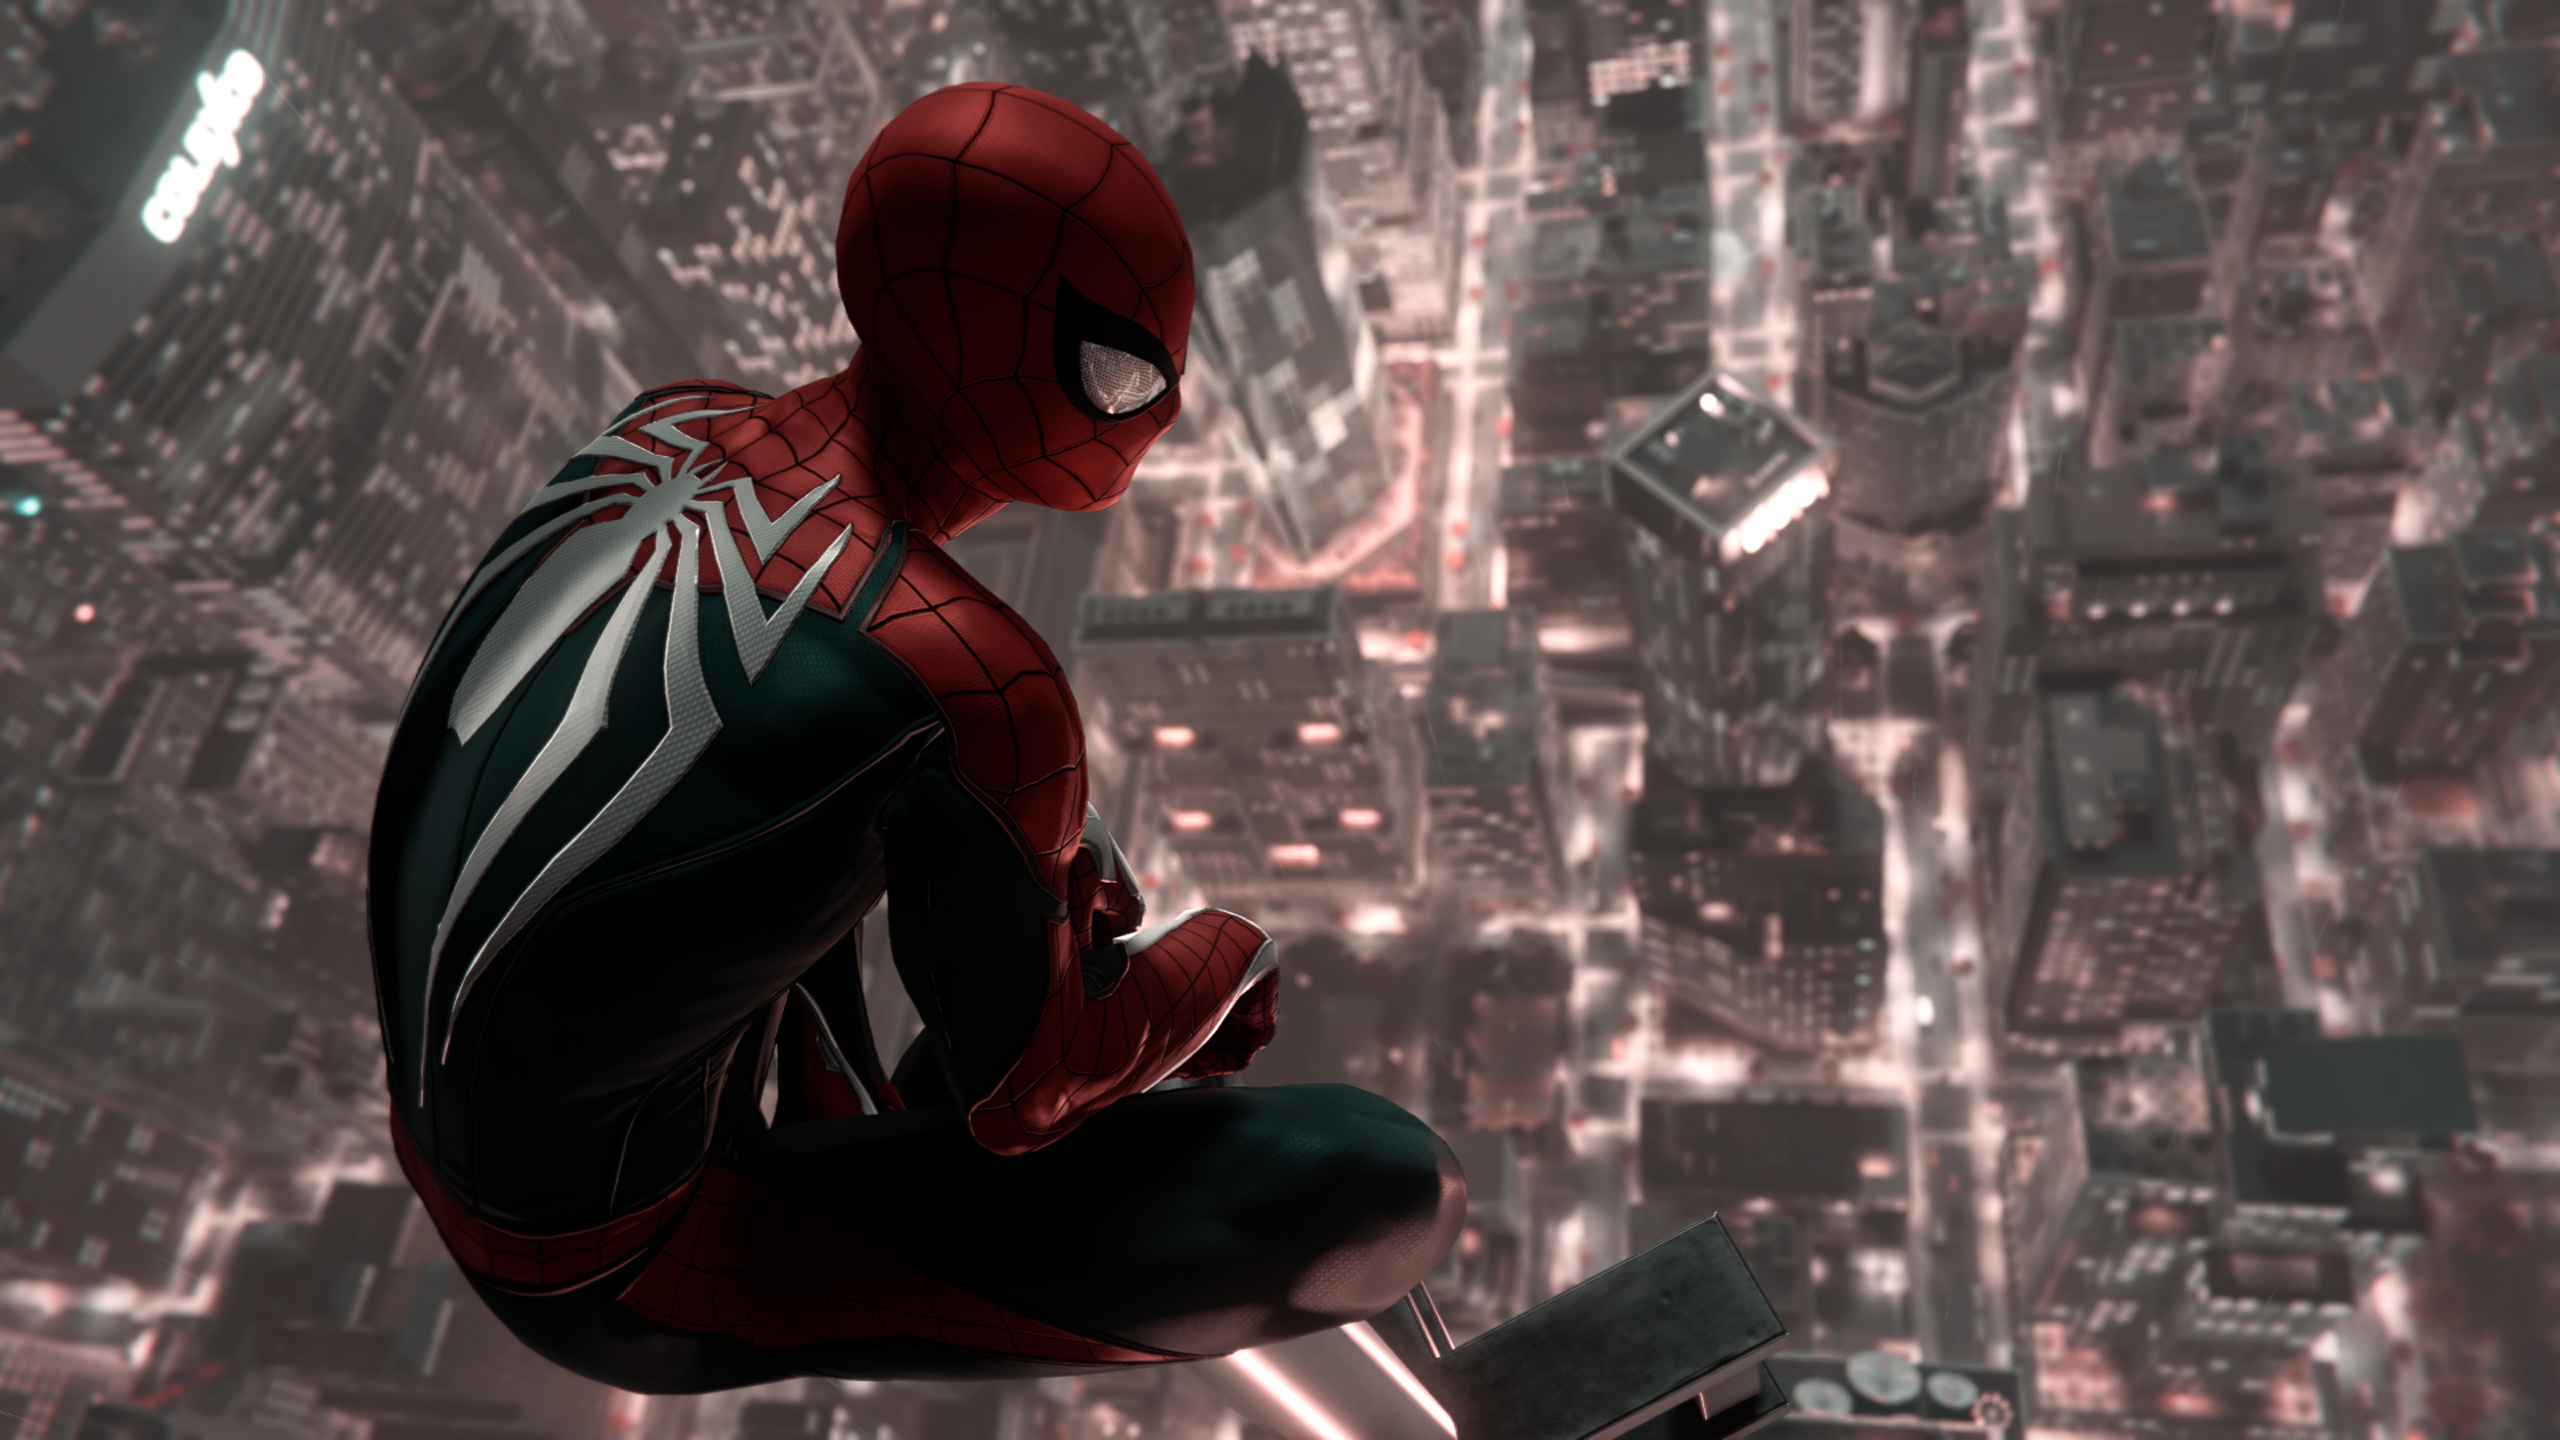 ps4 wallpaper,superheld,spider man,erfundener charakter,action adventure spiel,batman